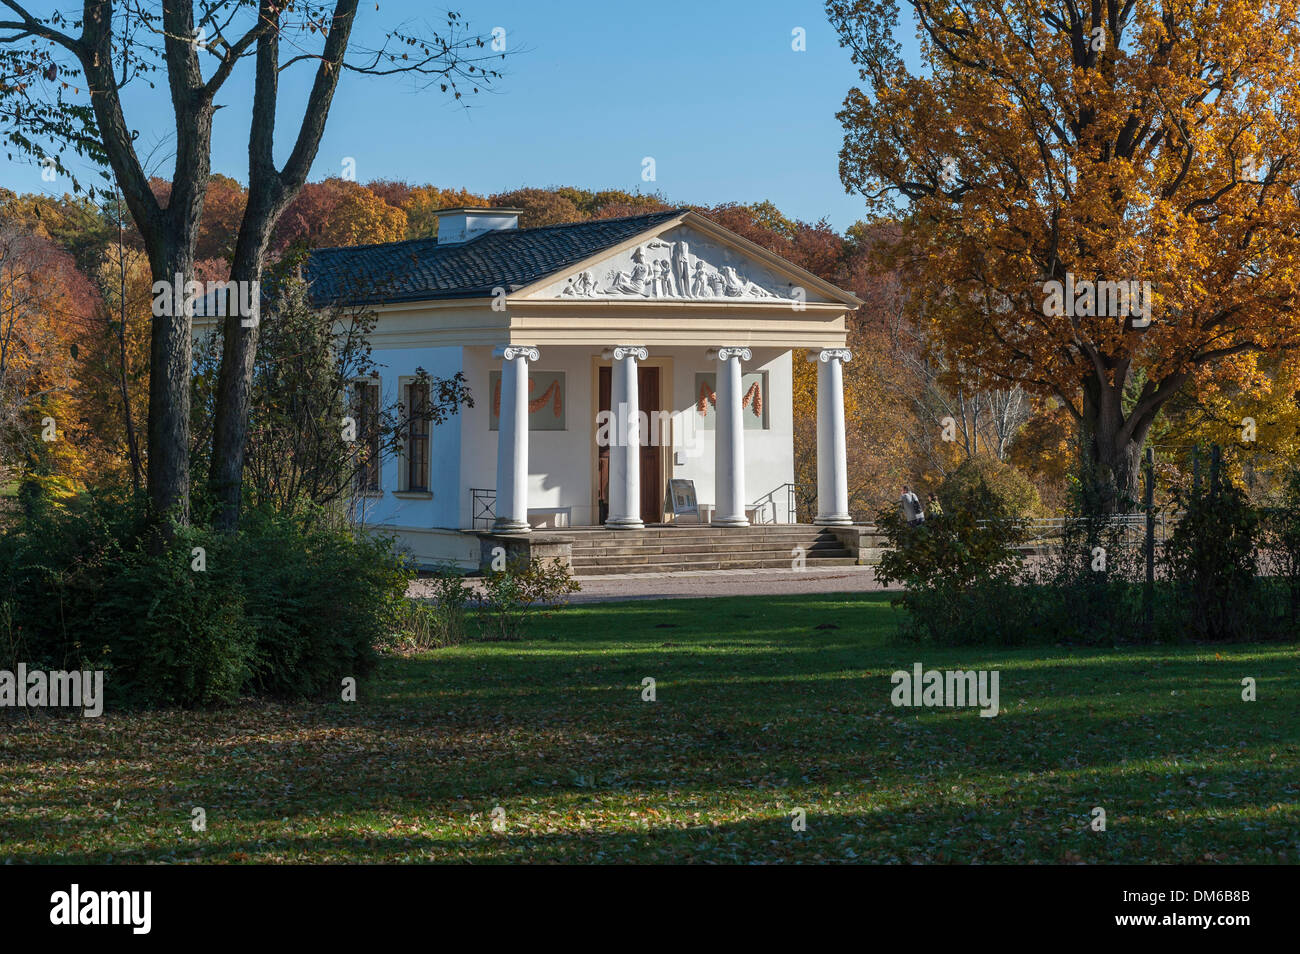 Casa Romana, Parco an der Ilm, Weimar, Turingia, Germania Foto Stock